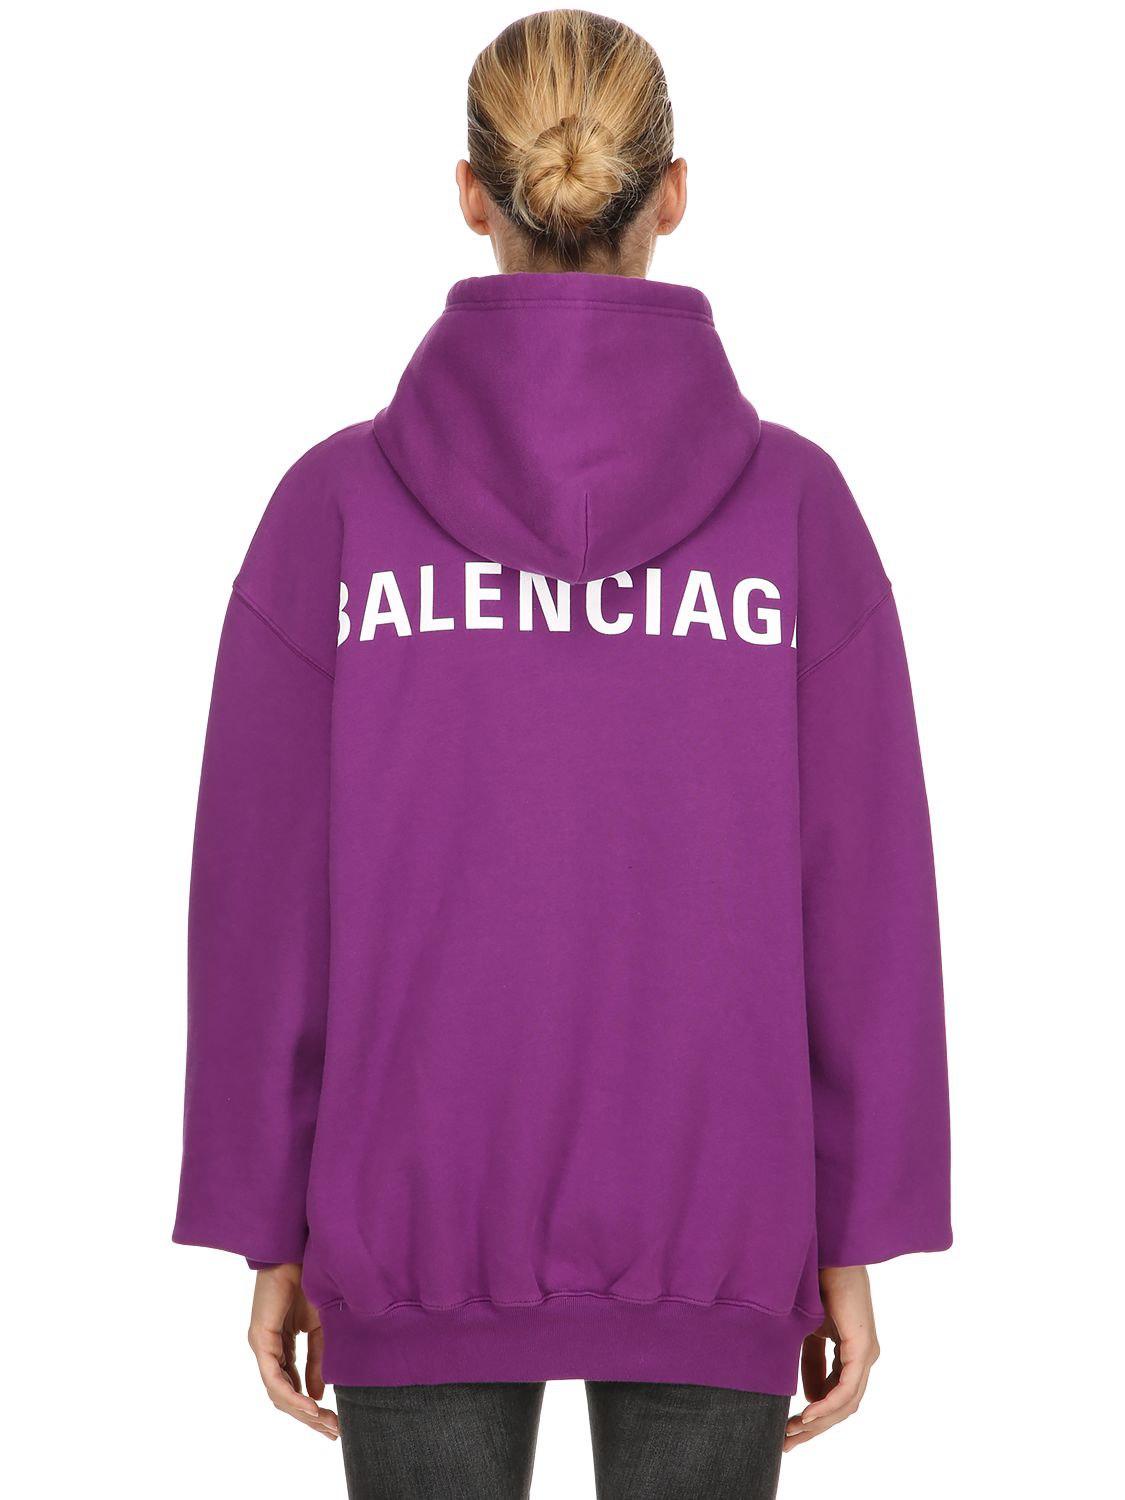 Balenciaga Logo Printed Jersey Sweatshirt Hoodie in Purple - Lyst